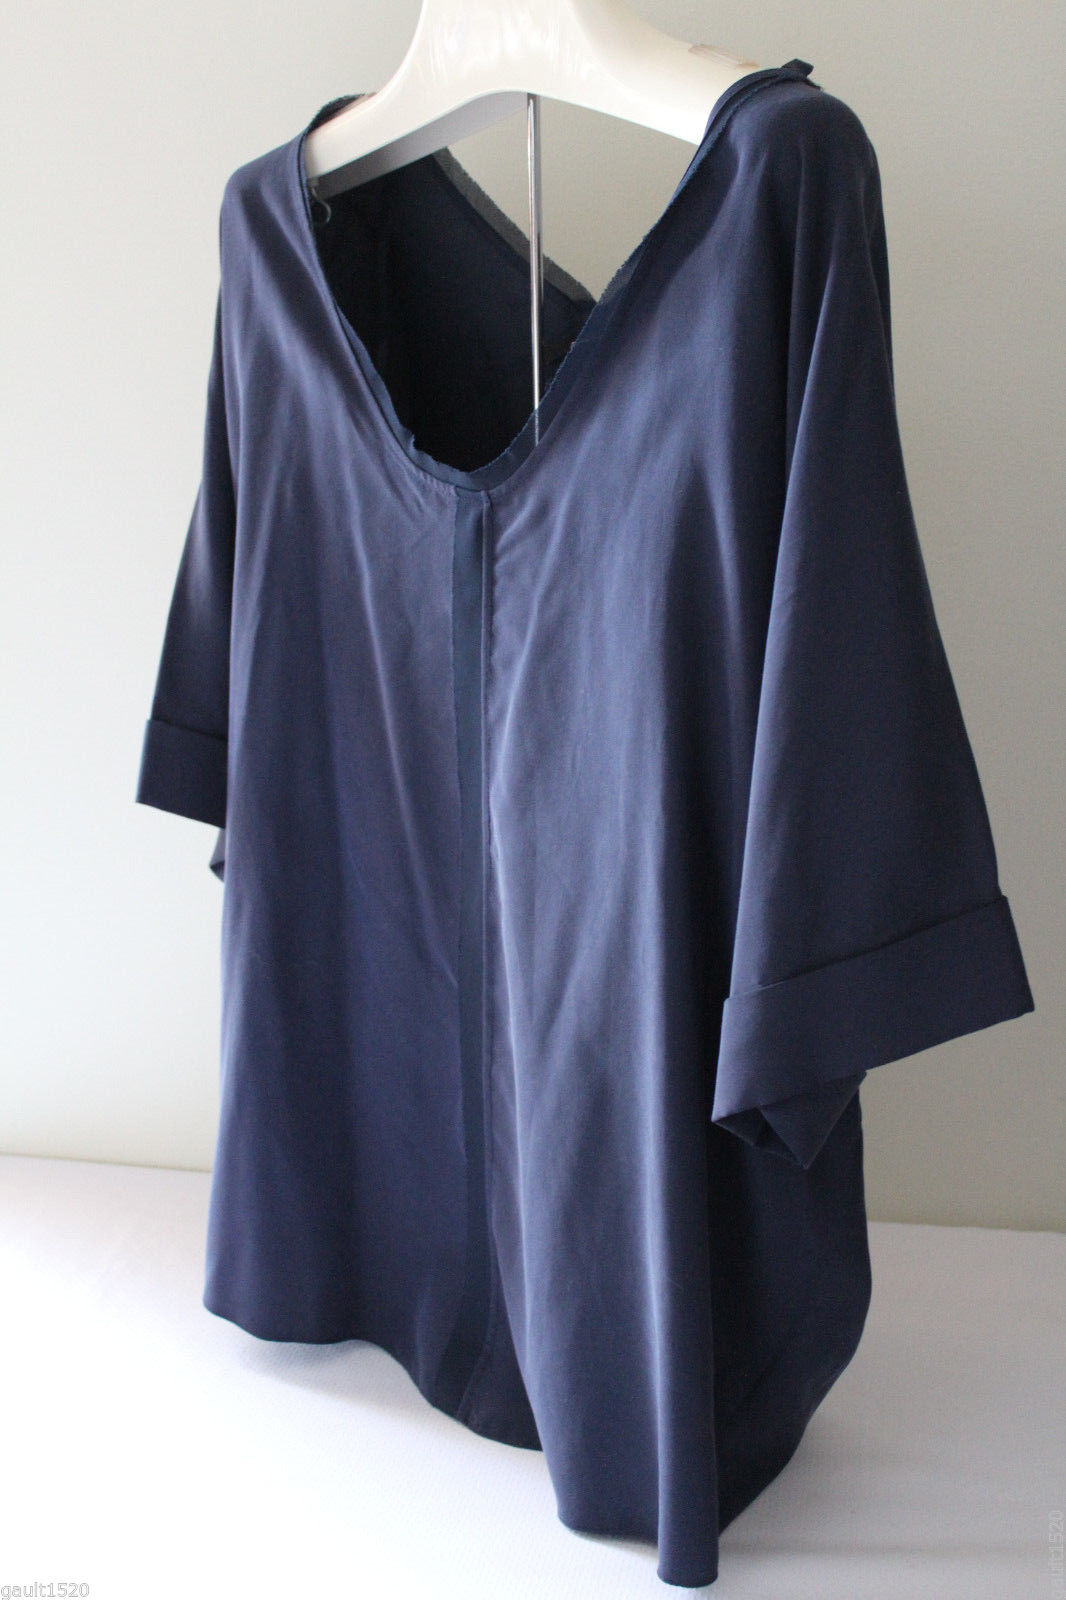 Primary image for NWT Tahari Designer Navy Yard Flynn Blouse Silky Blue Oversized Dress Top M $198